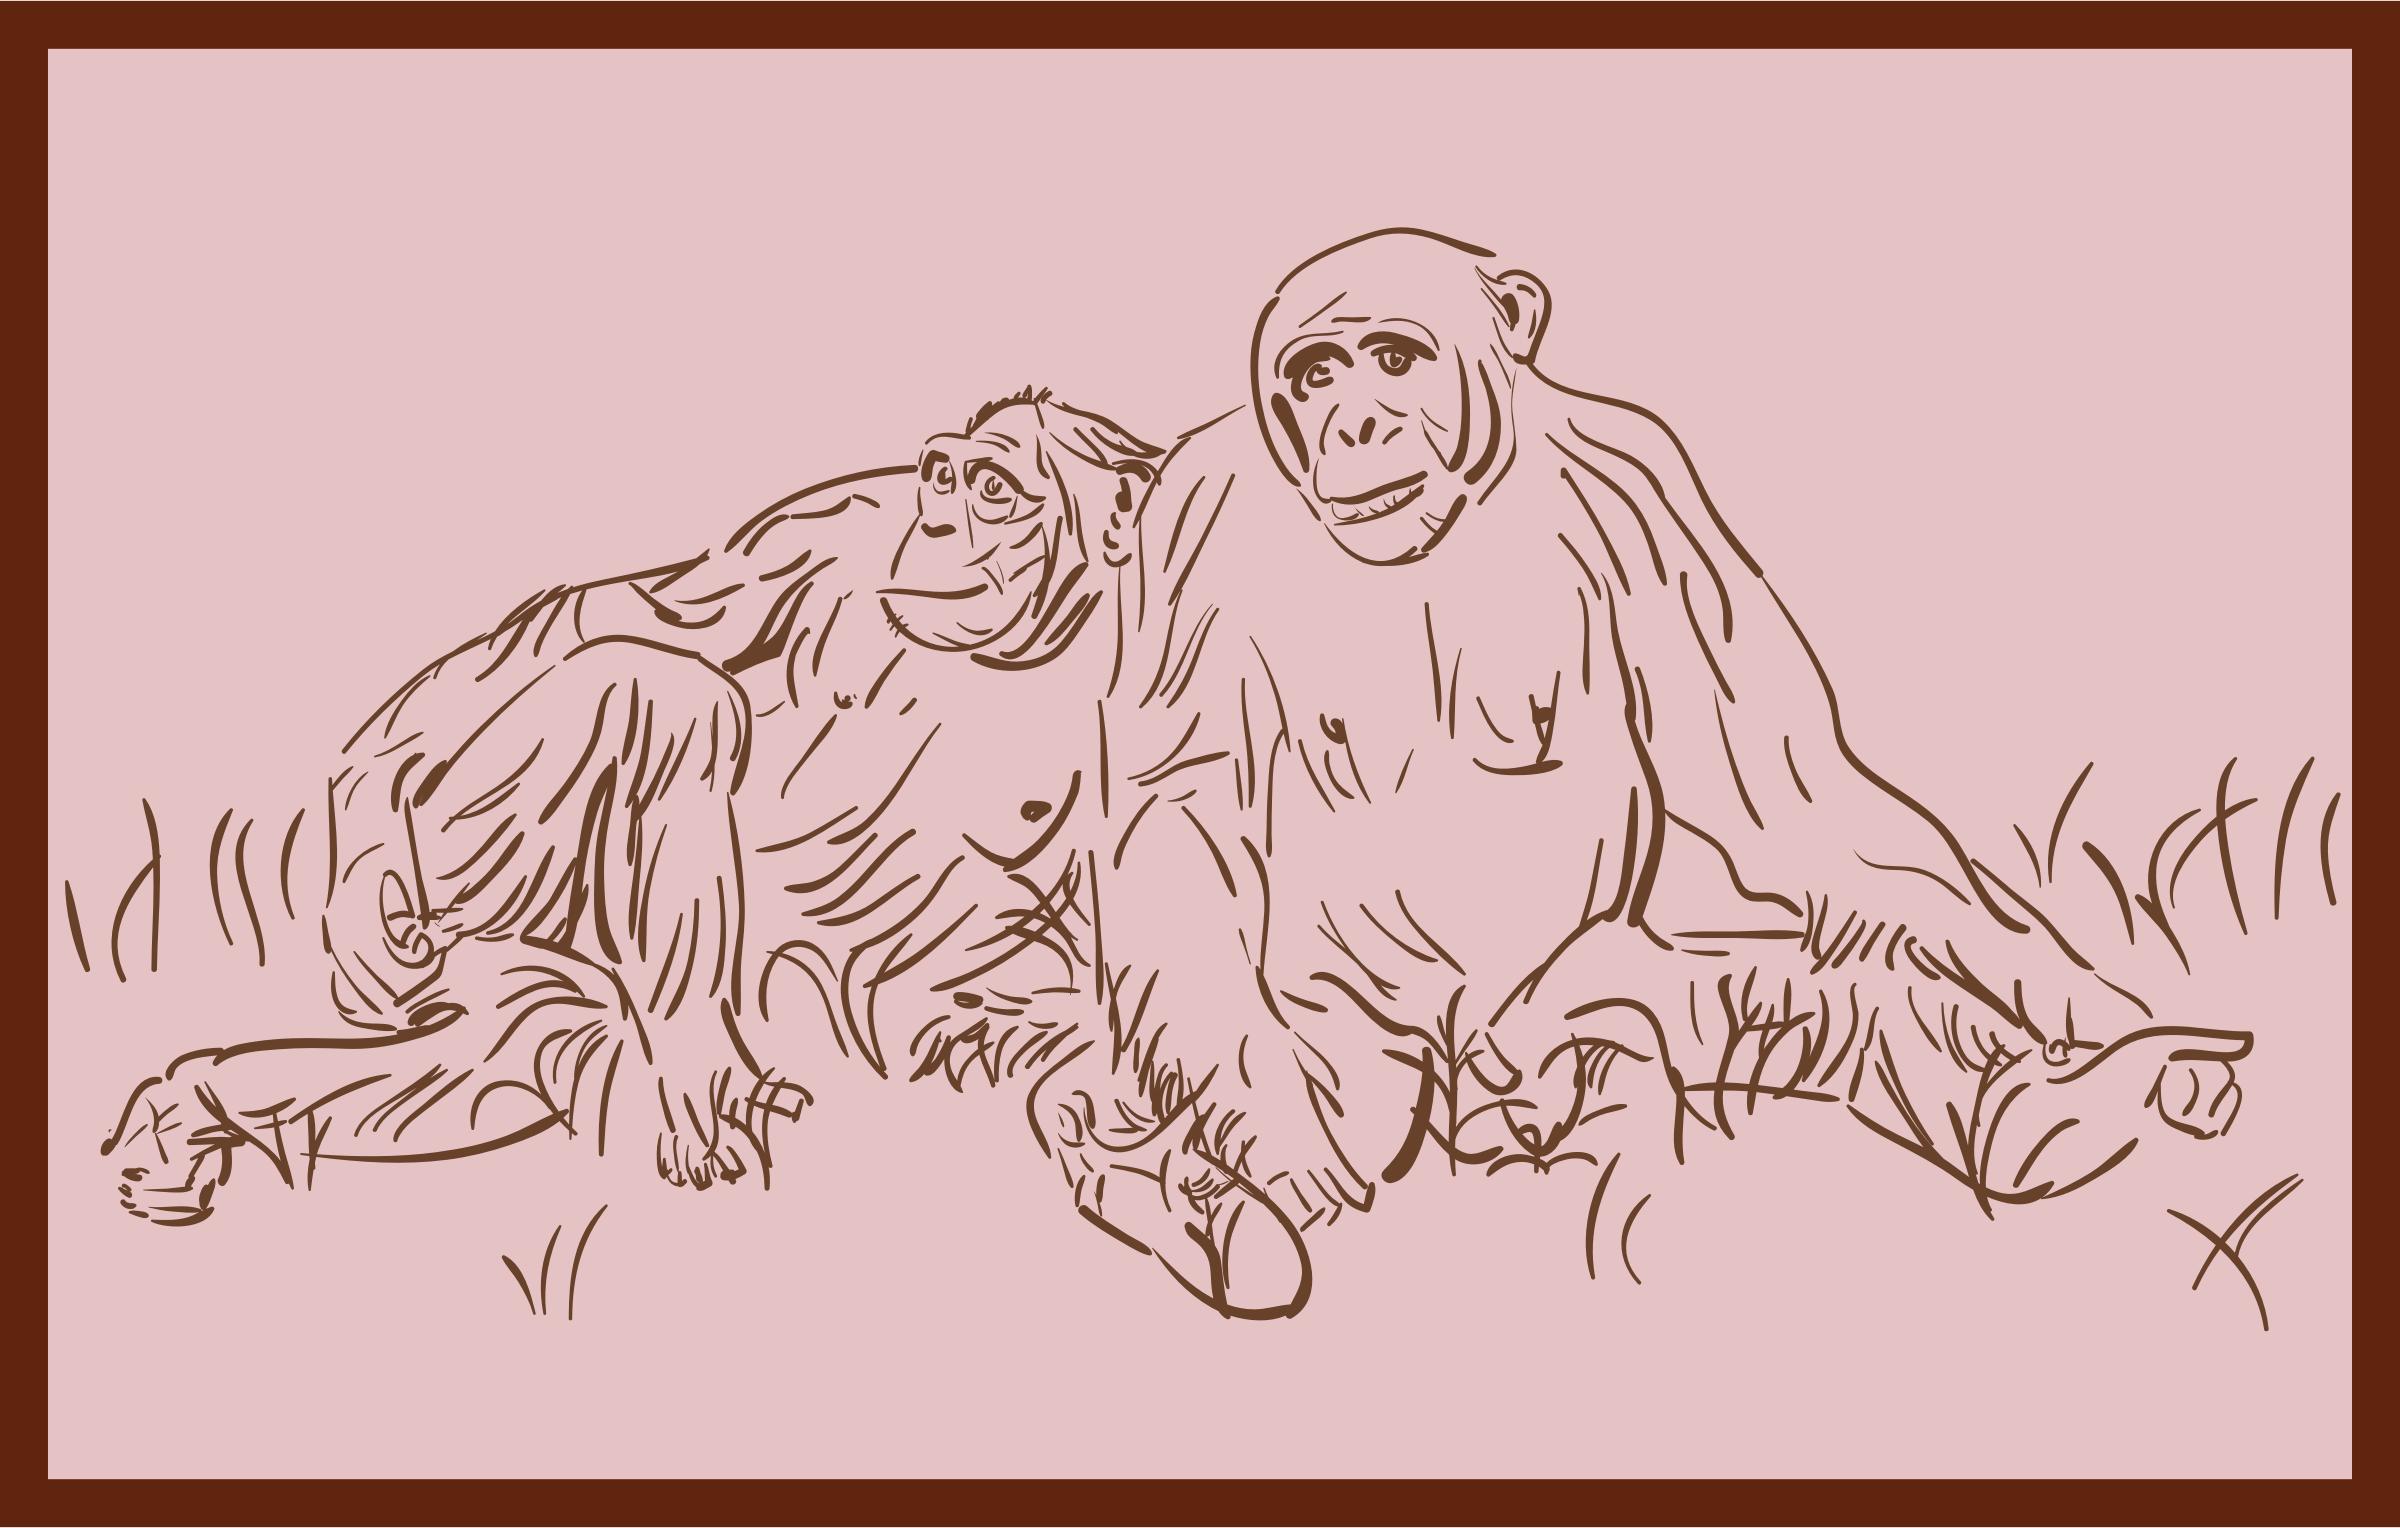 resting chimpanzee icons